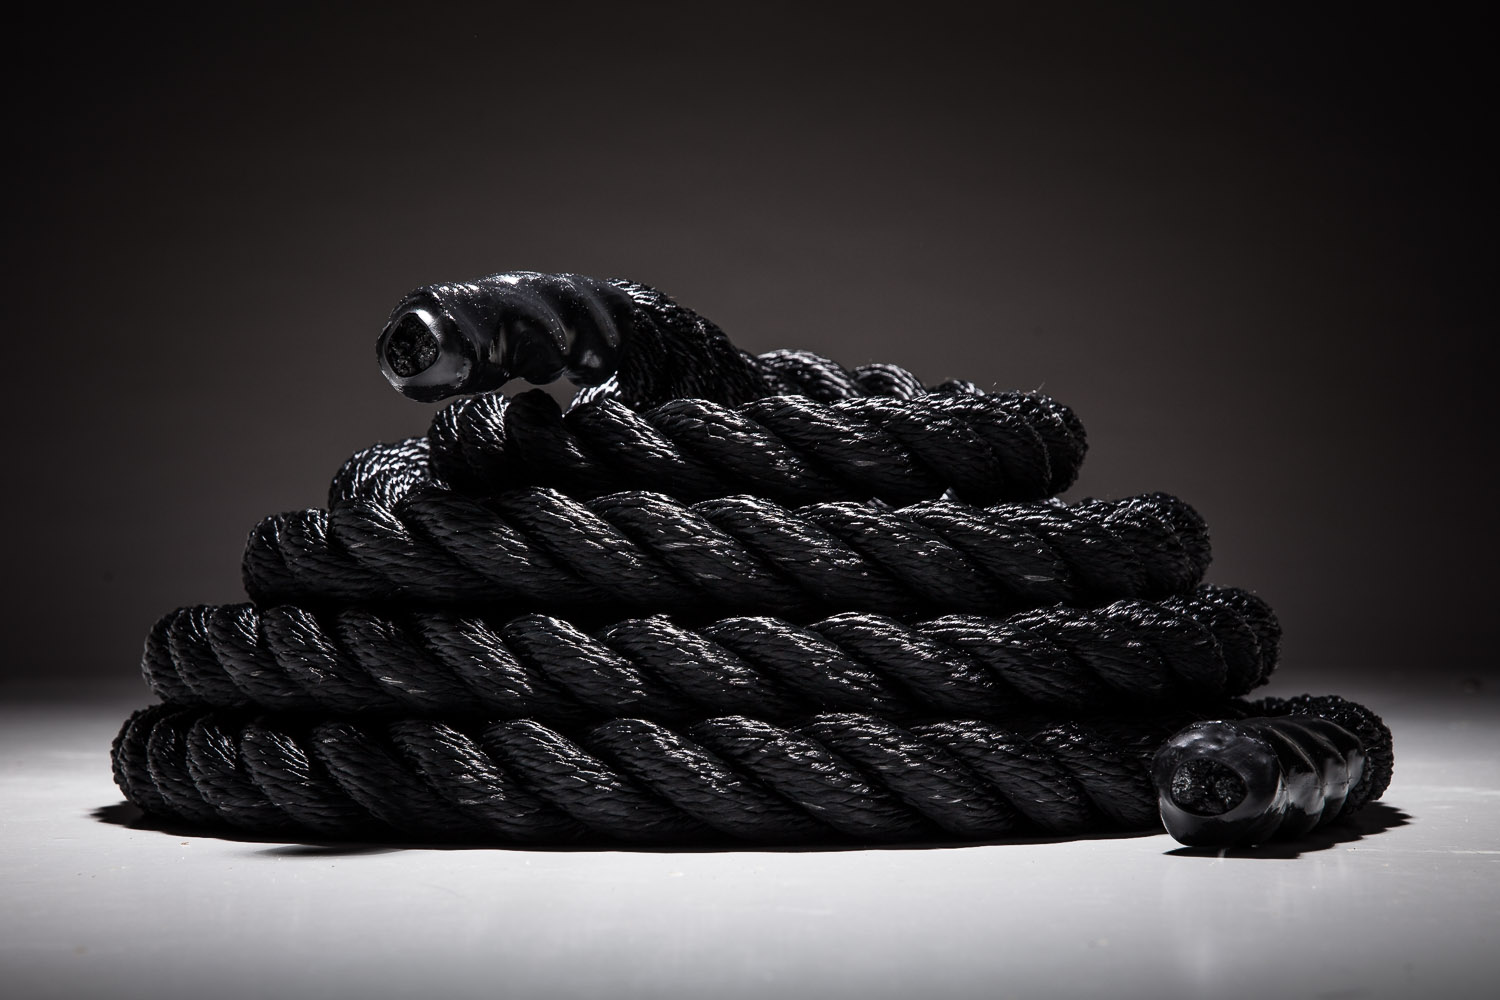 battle rope  black — Fitness Solutions LLC